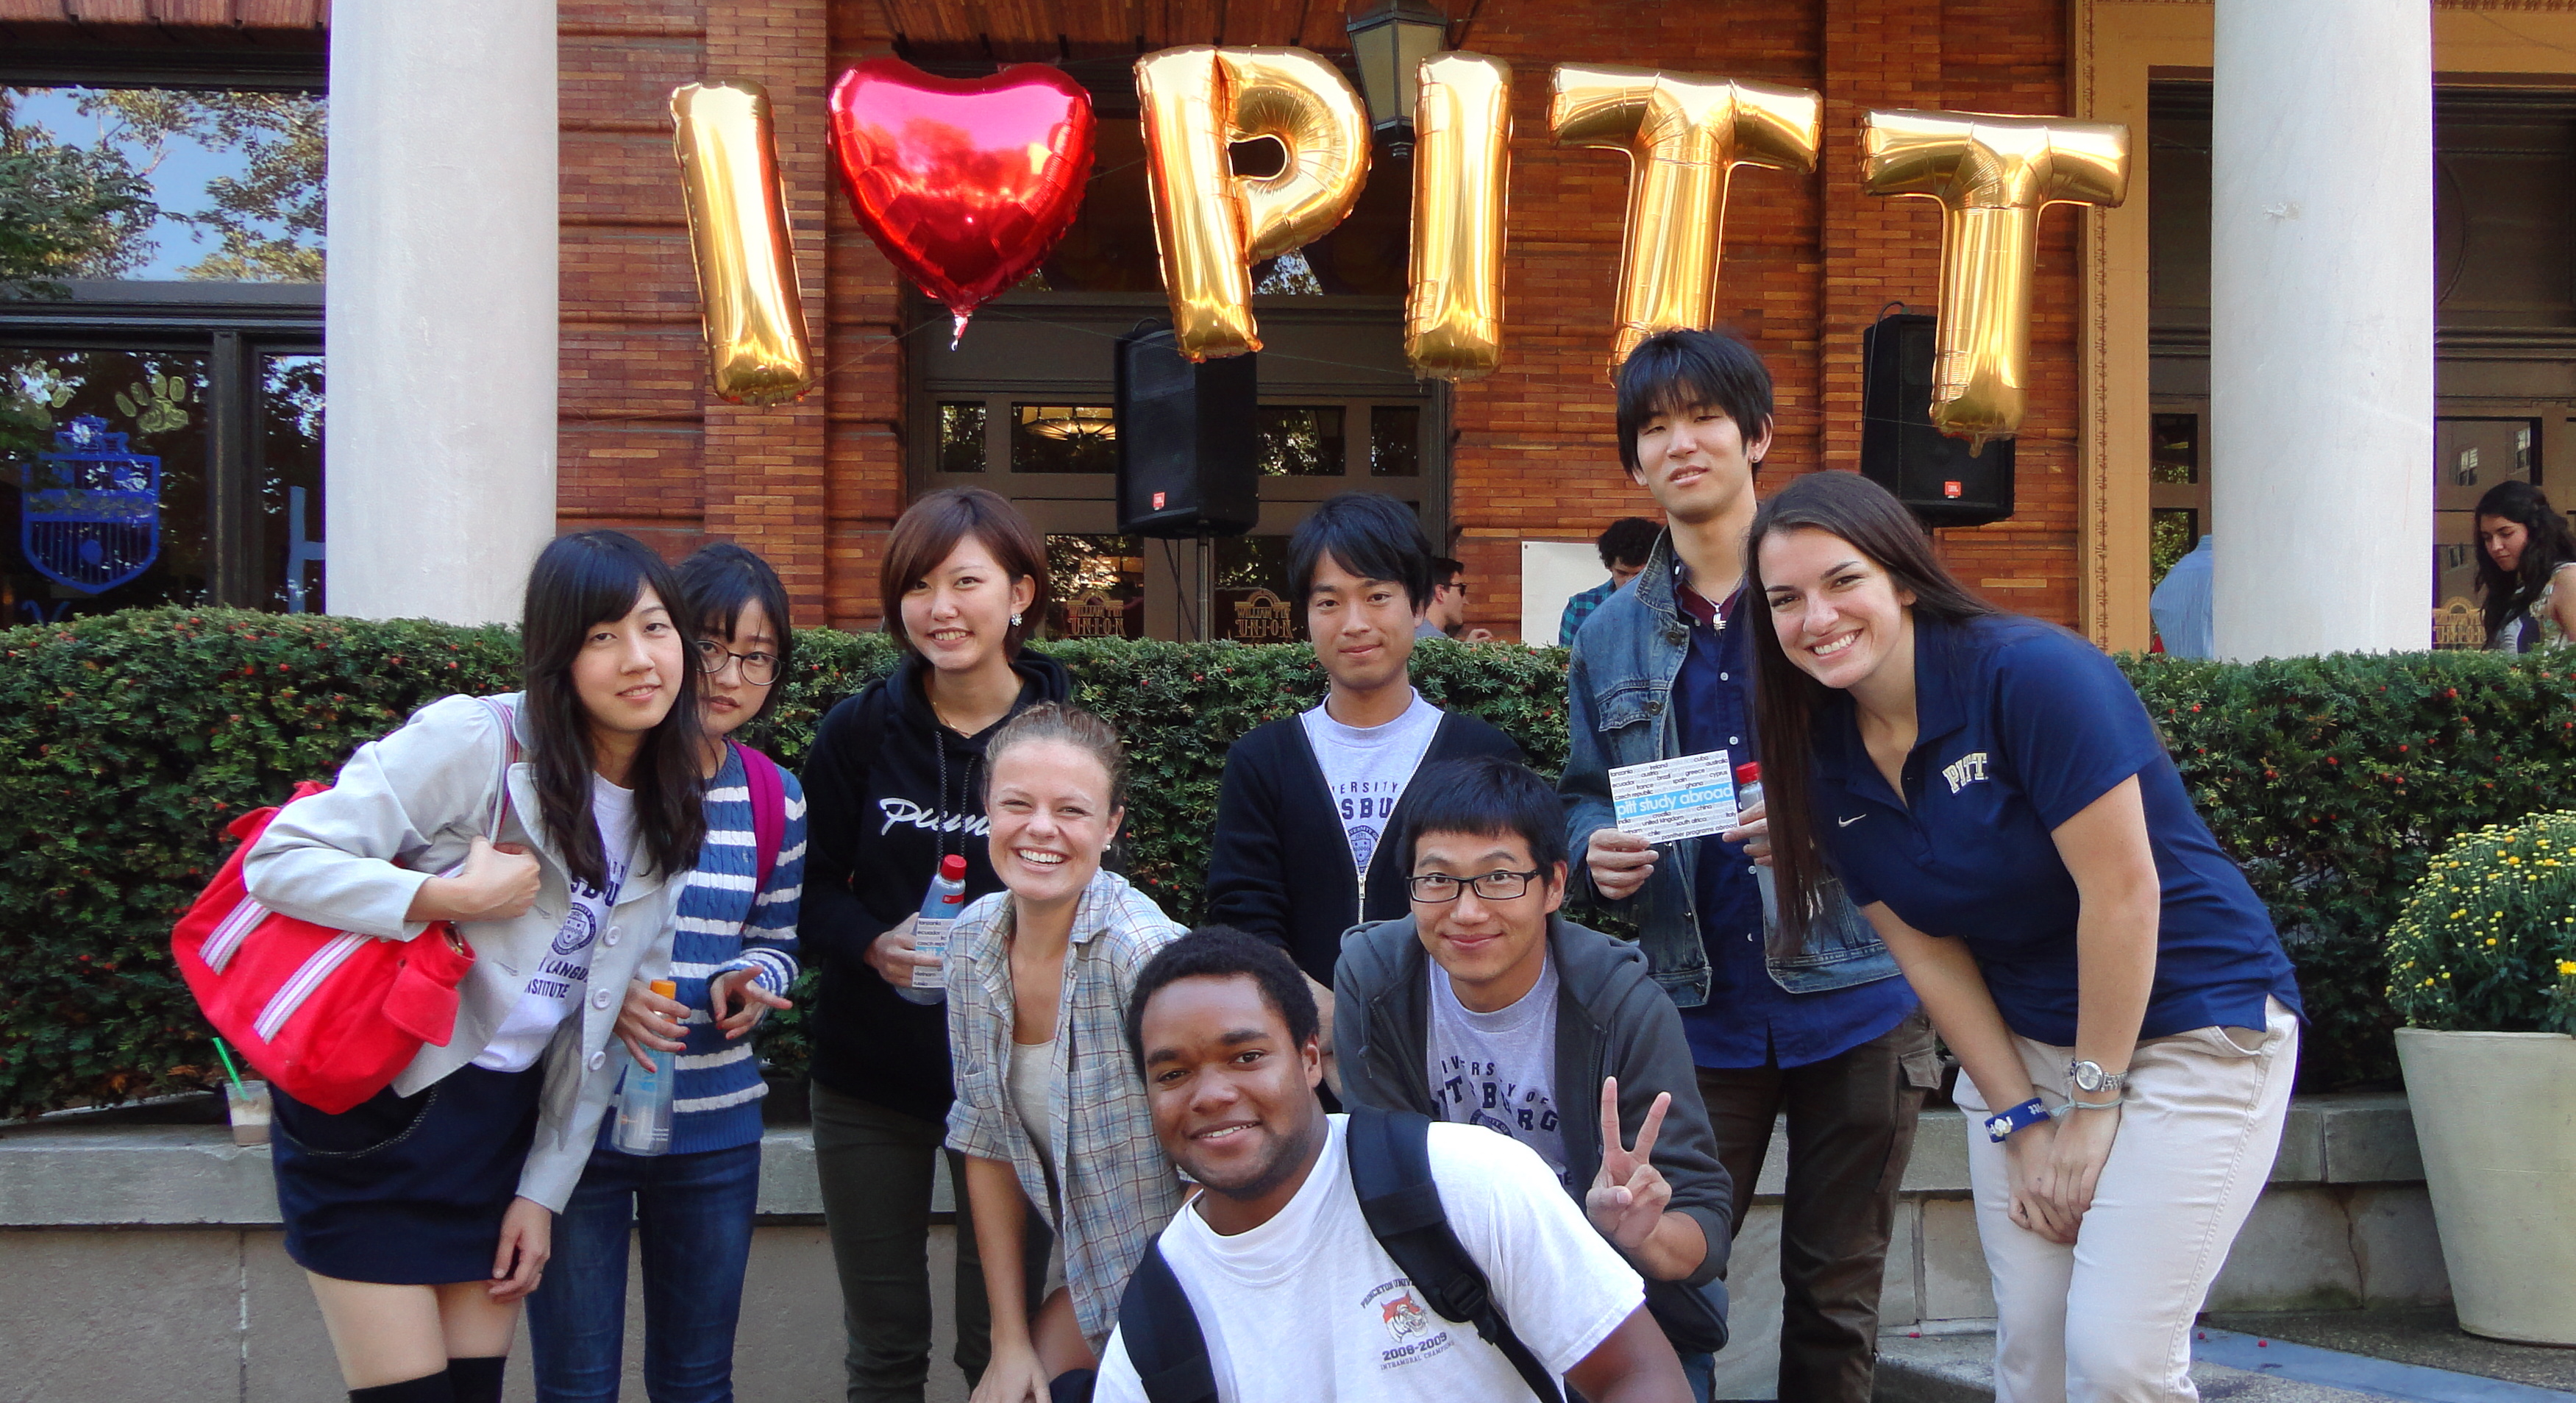 ELI students love Pitt!